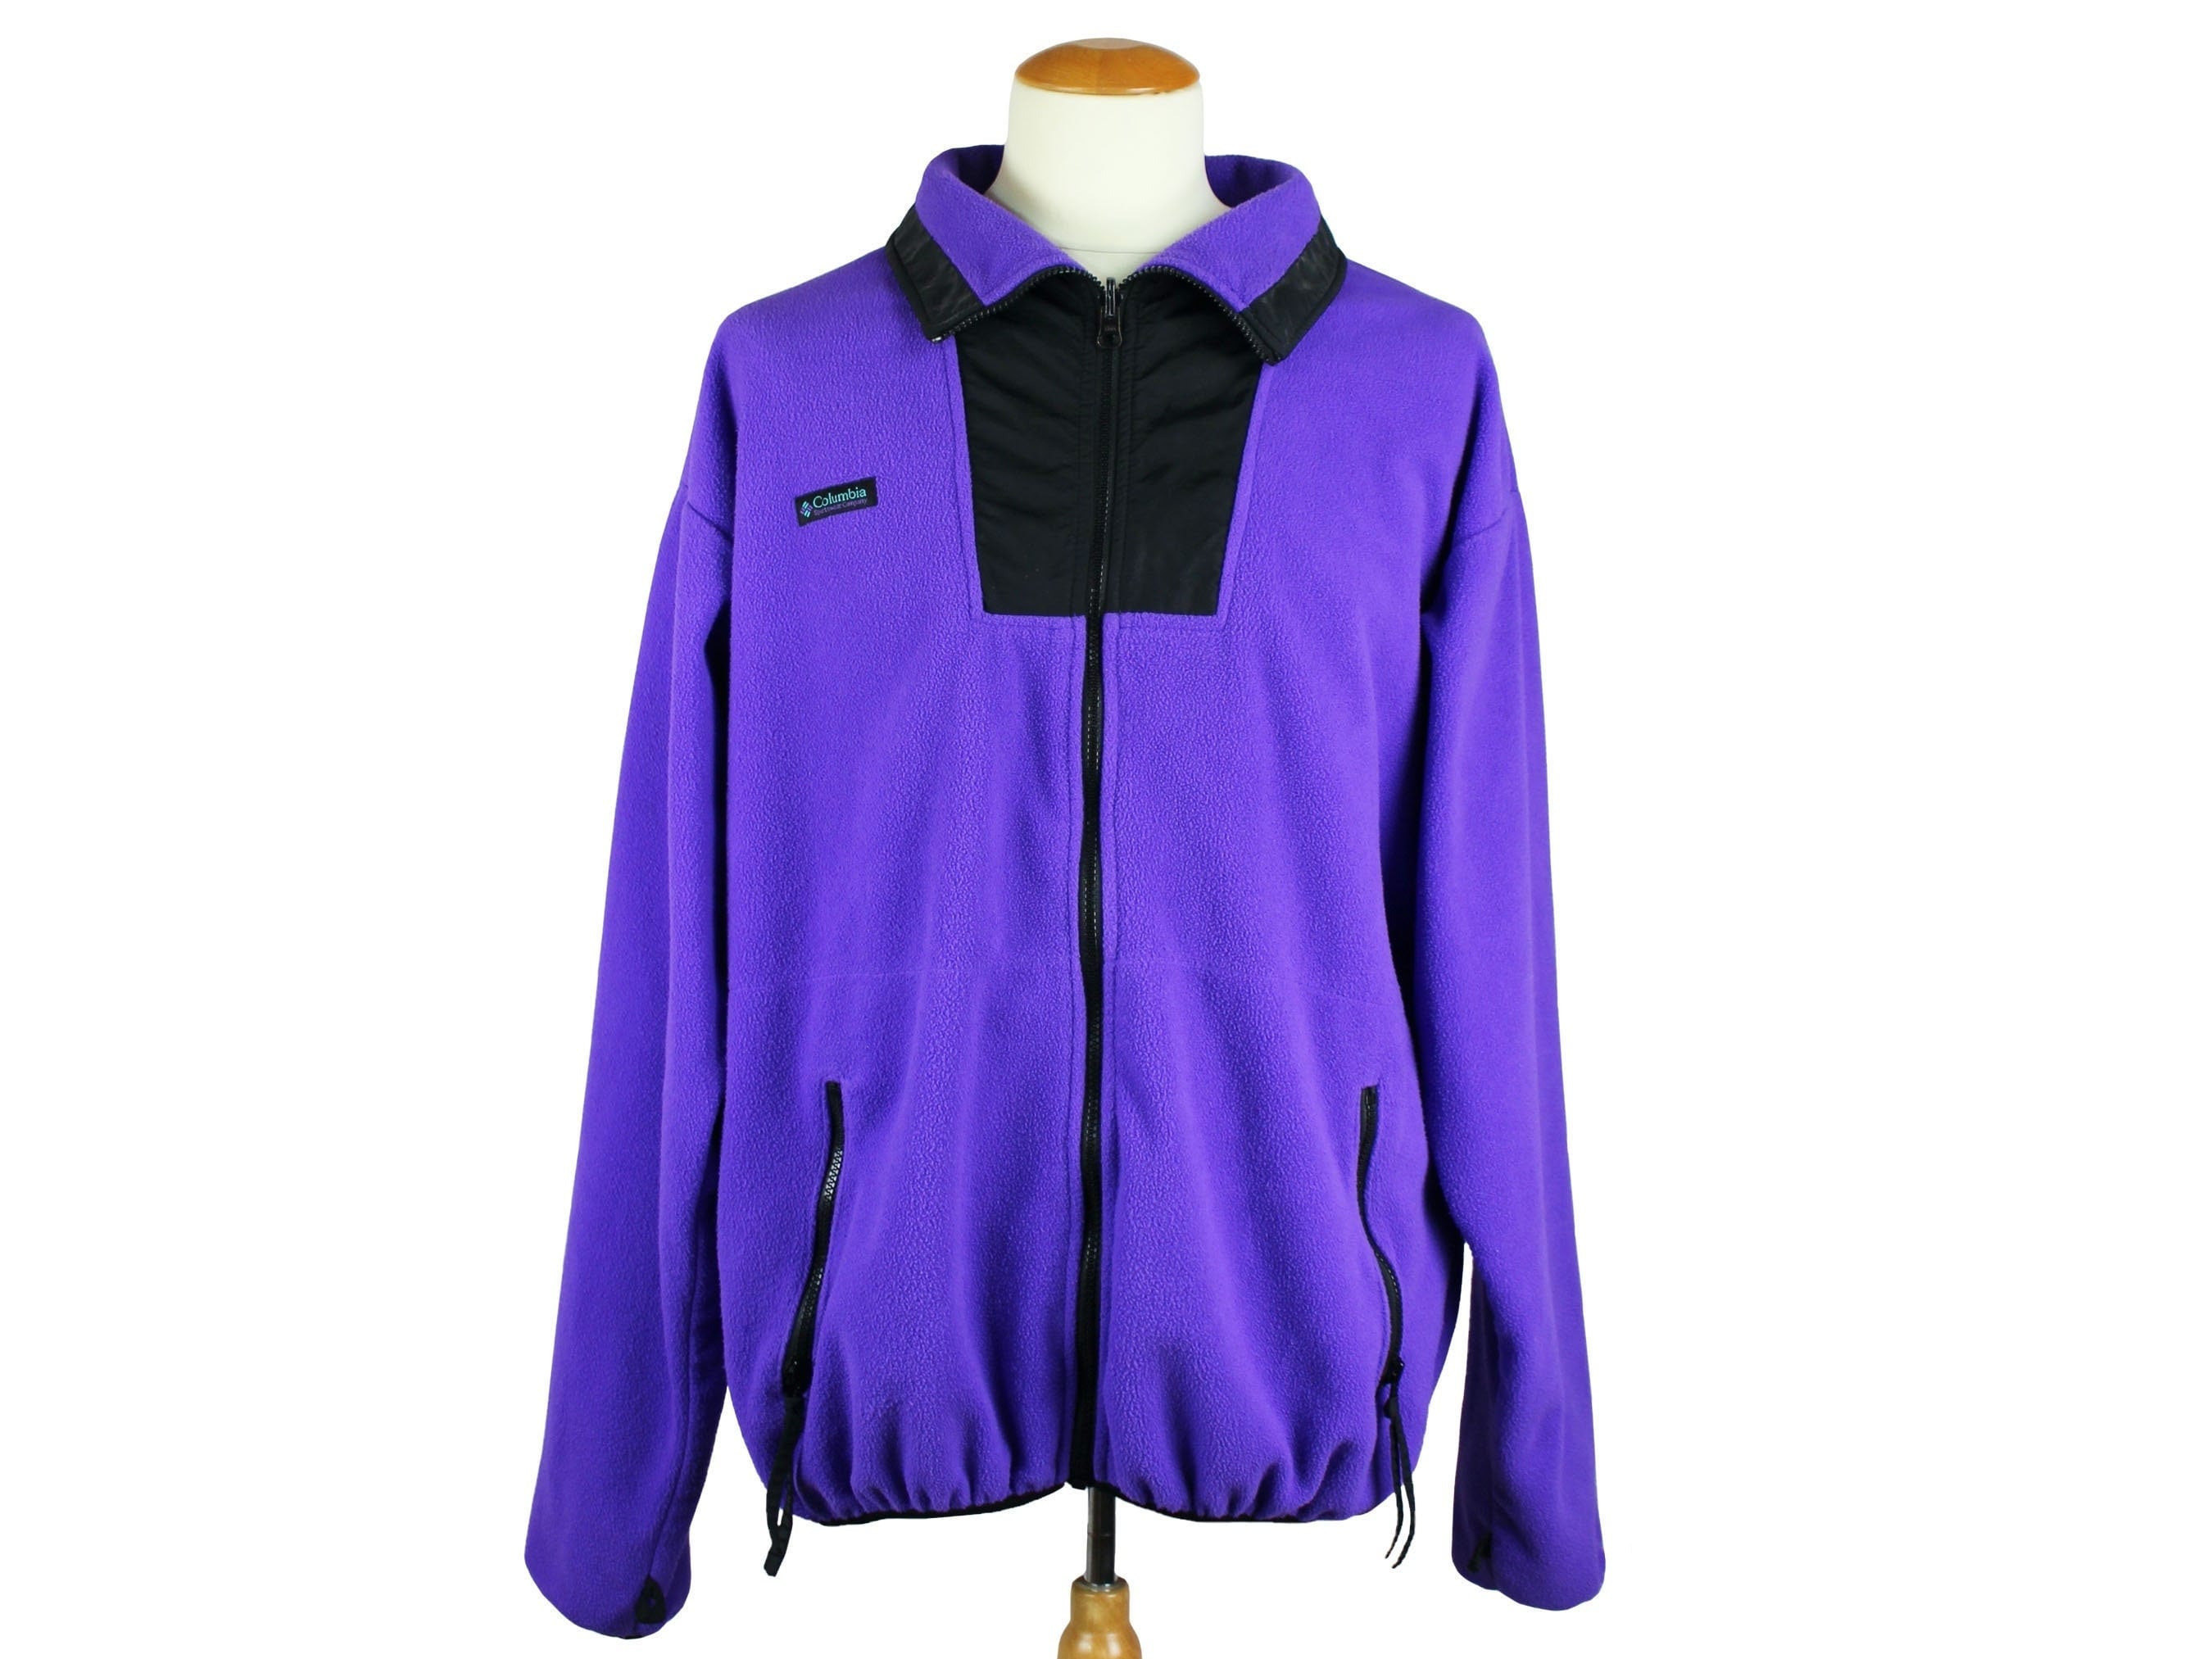 Vintage Columbia Womens Small Jacket Patterned Fleece Teal Purple Full Zip  FLAWS